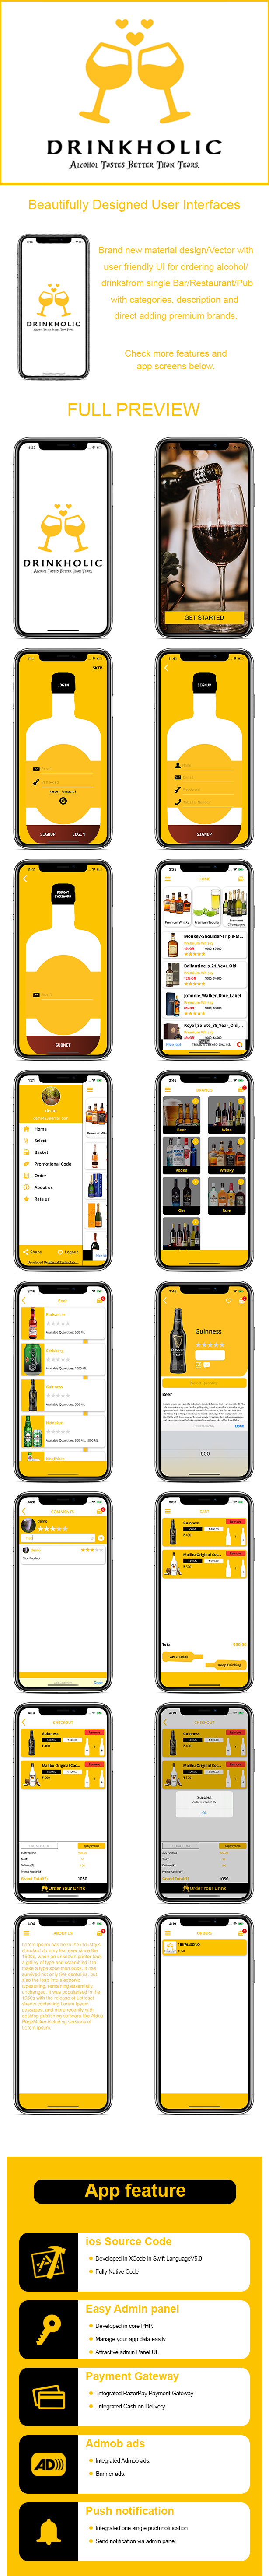 Drinkholic(iOS) - A Single Restaurant/Pub/Bar Drinks ordering app. - 1